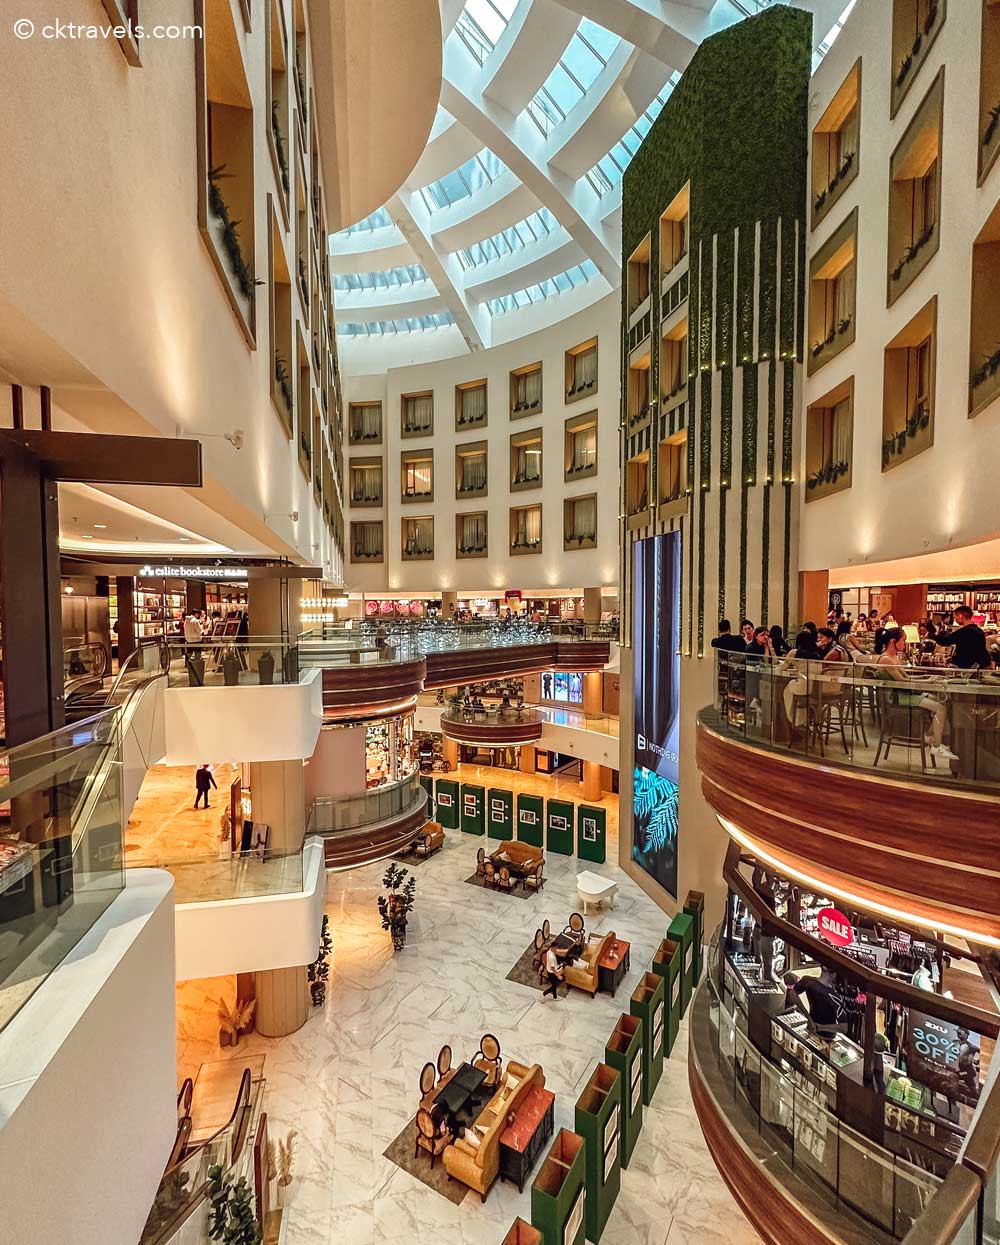 The Starhill Mall Kuala Lumpur malls